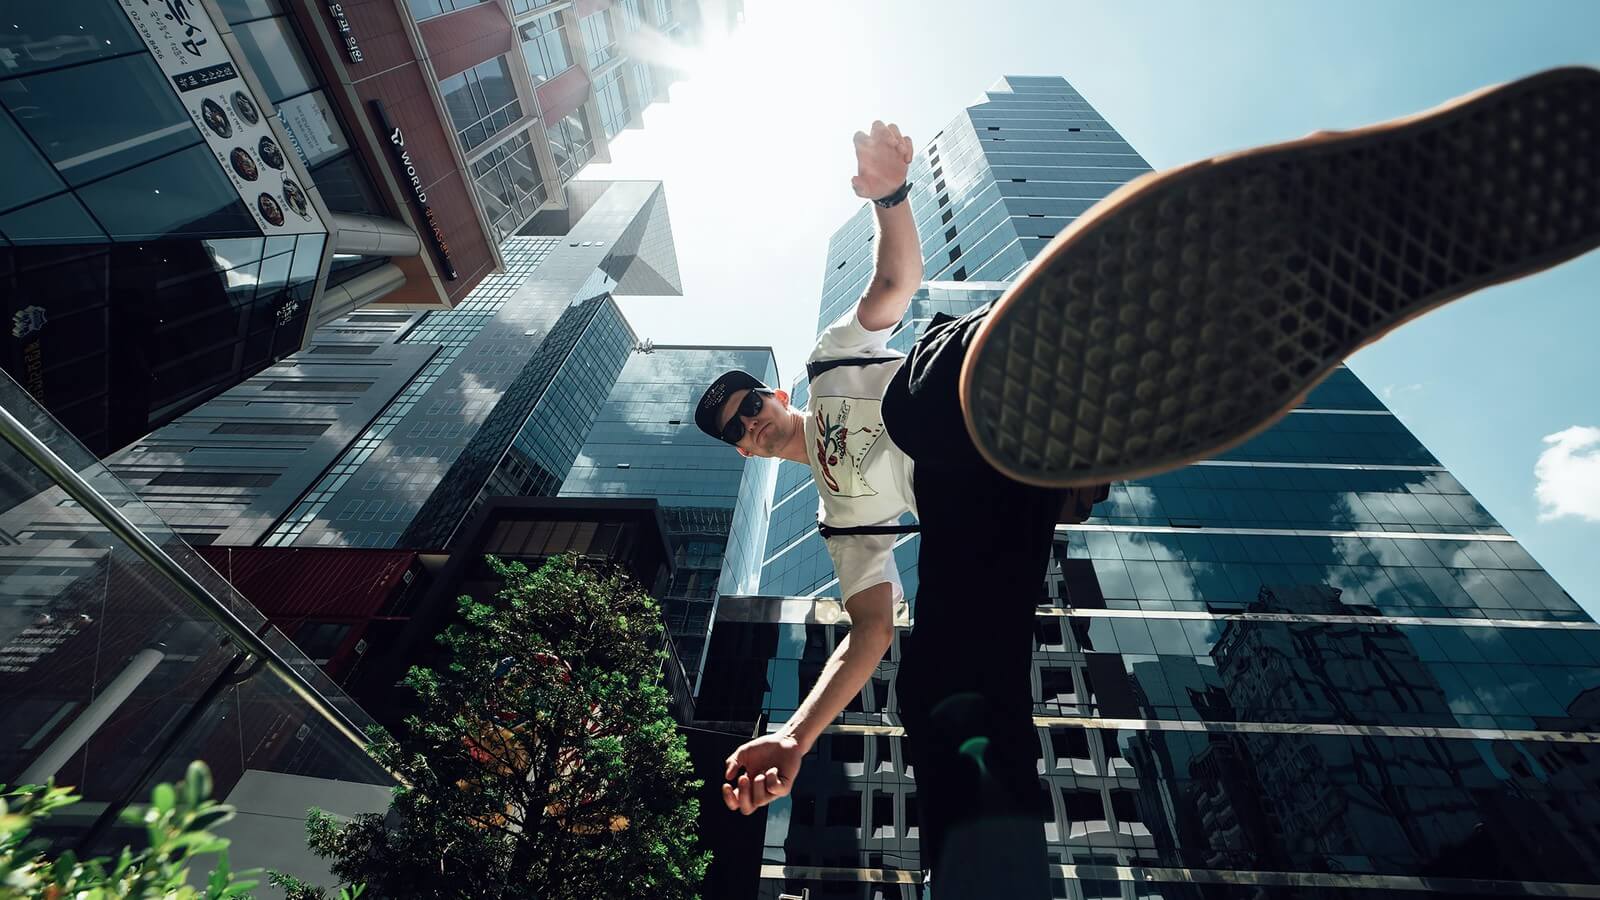 An upward shot of a city with a young man jumping upwards. 